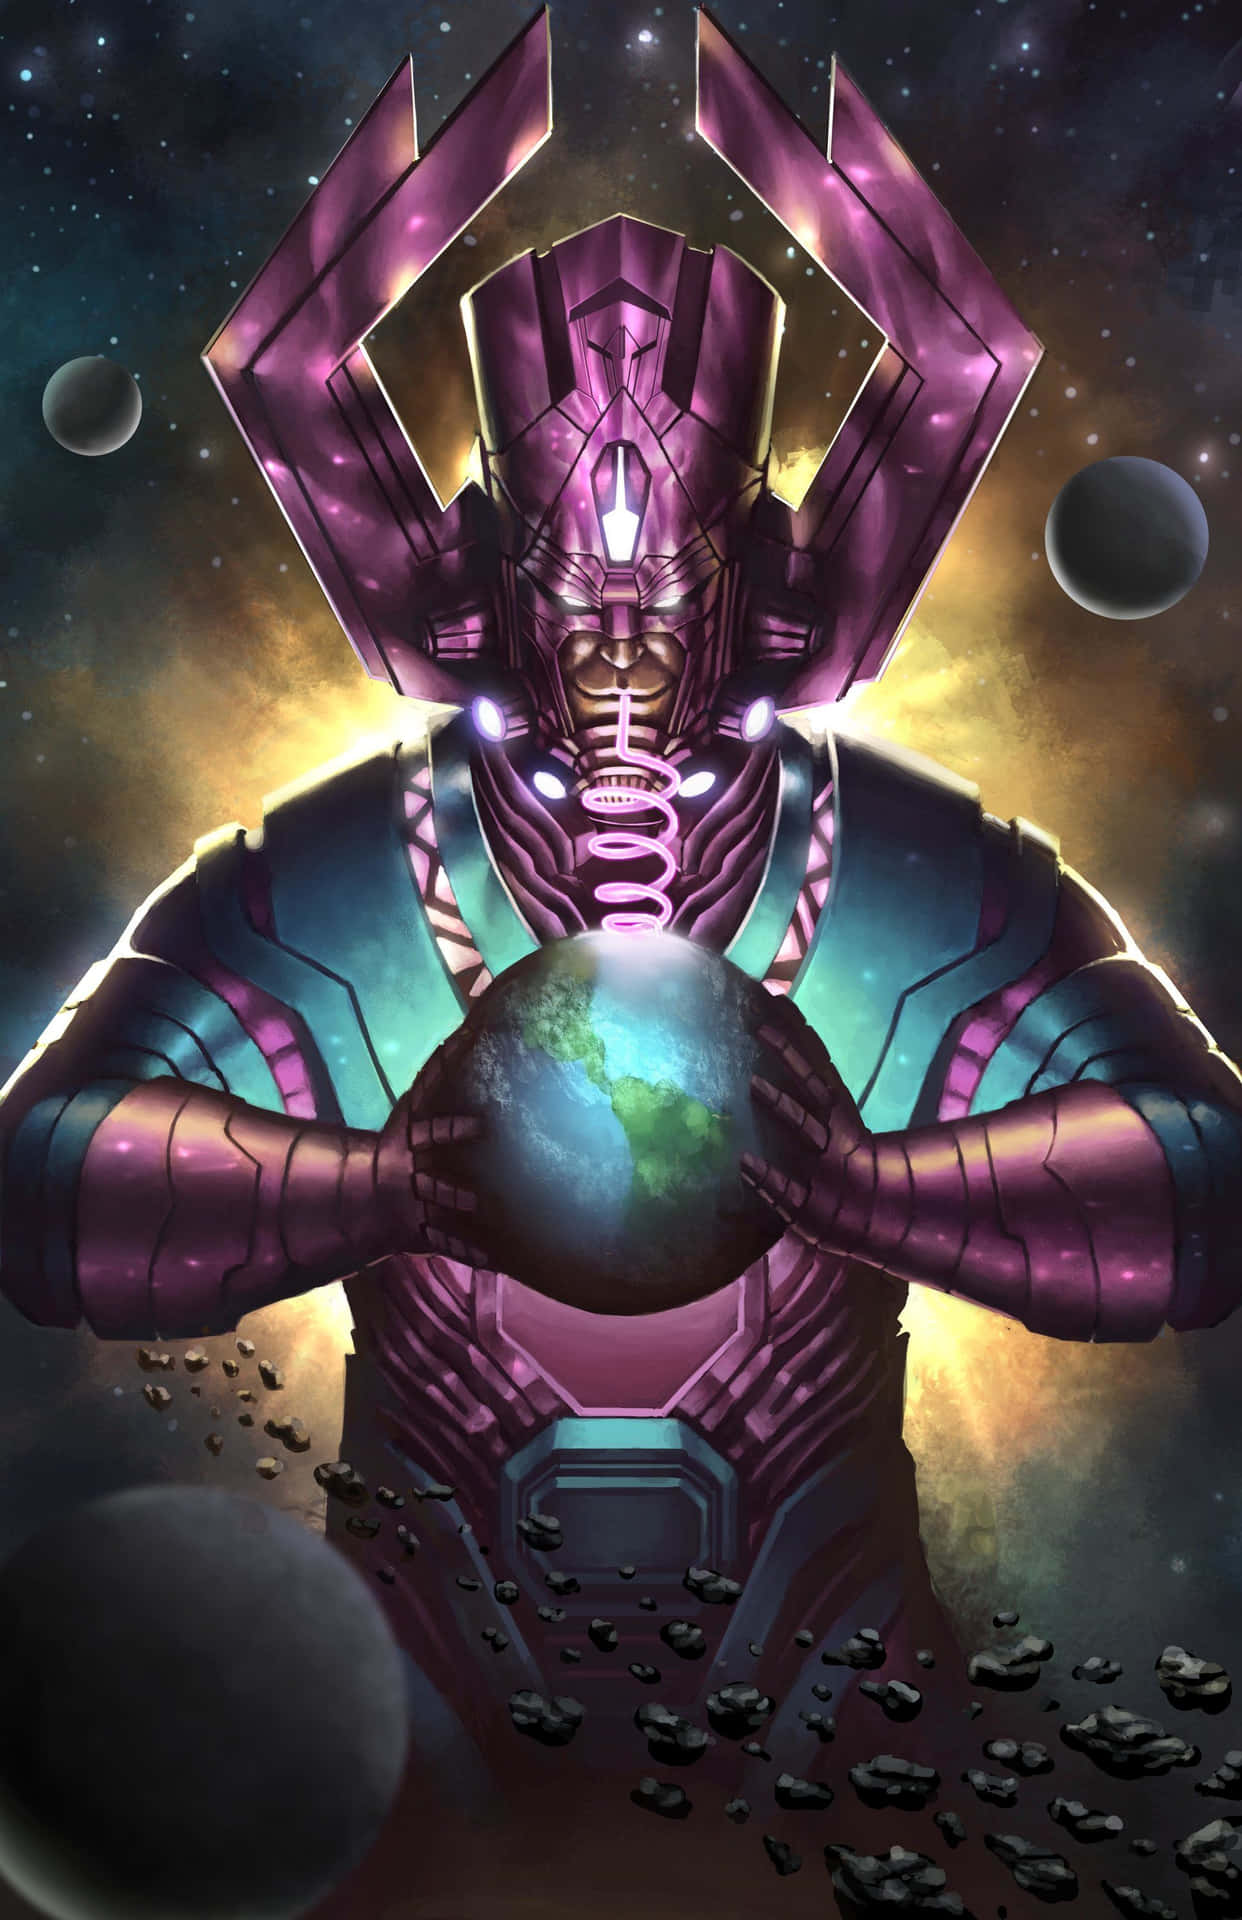 Galactus Conquering the Universe Wallpaper